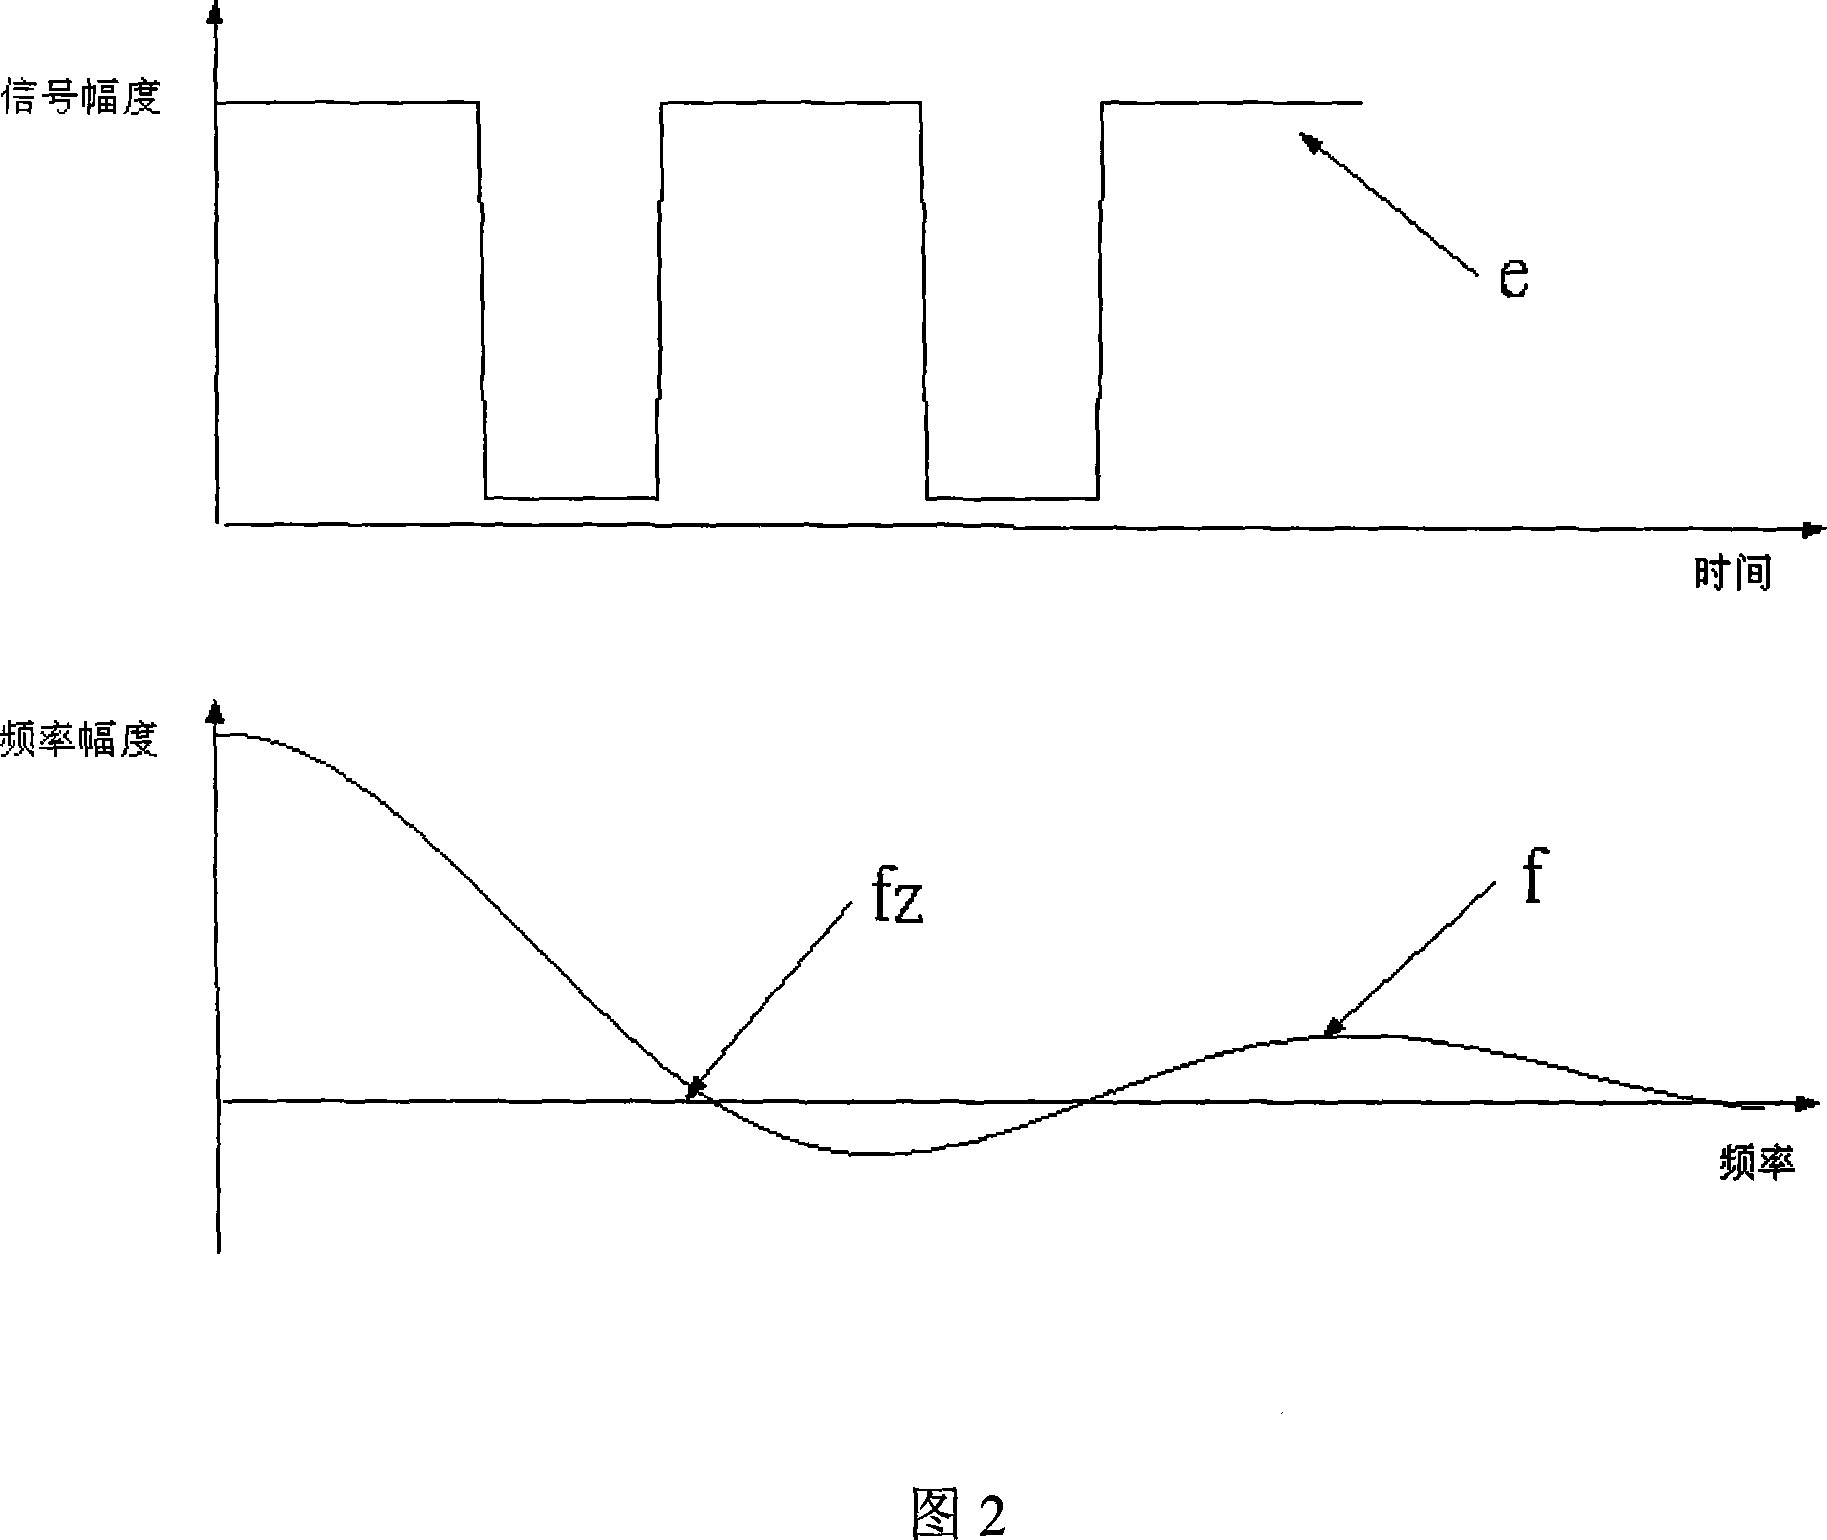 Transit time testing method of fiber optic gyroscope